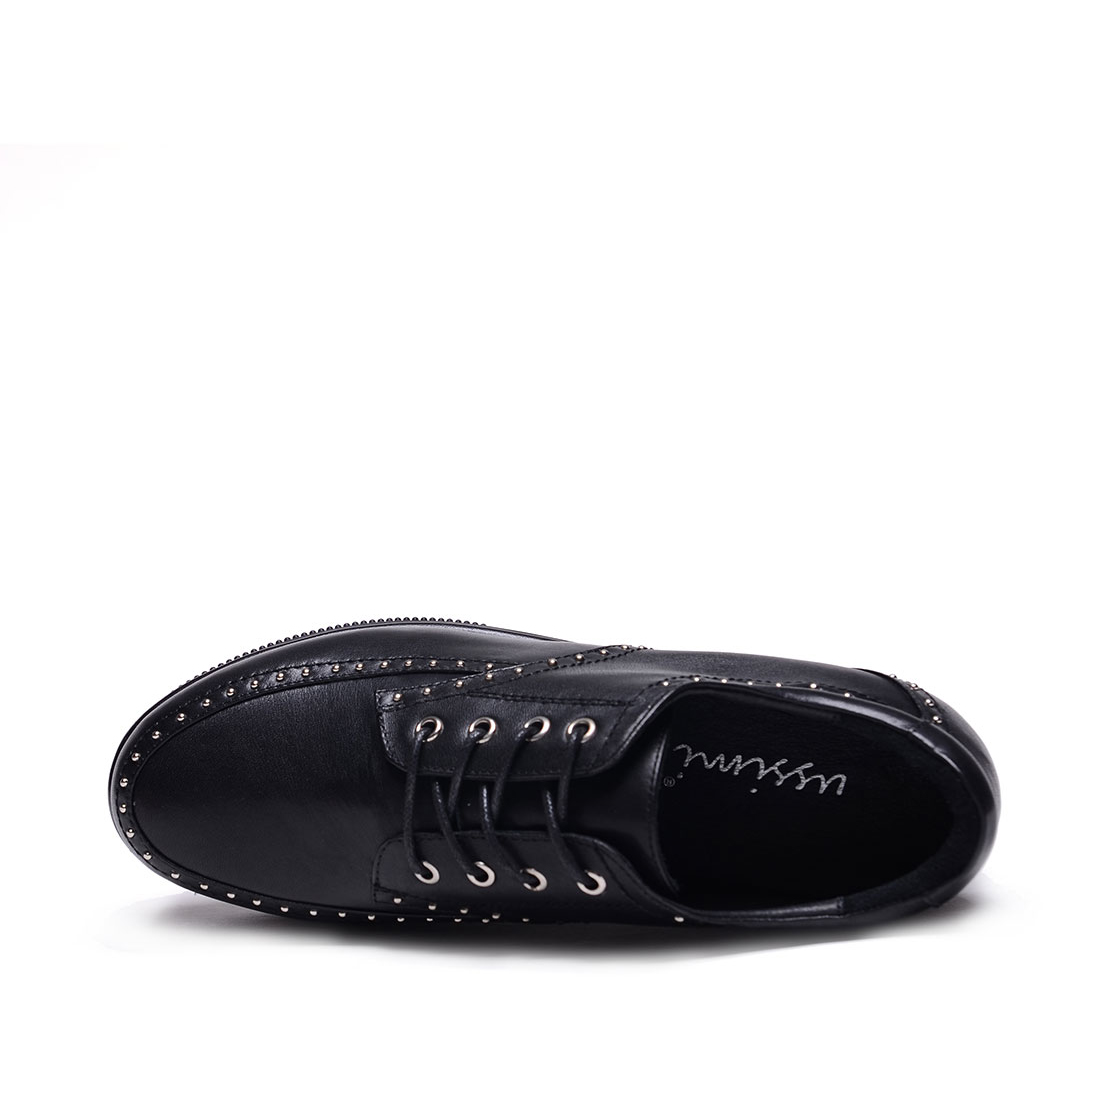 [Perezer]欧美风铆钉牛皮革深口鞋(尺码标准)
编号：A0190S1A58